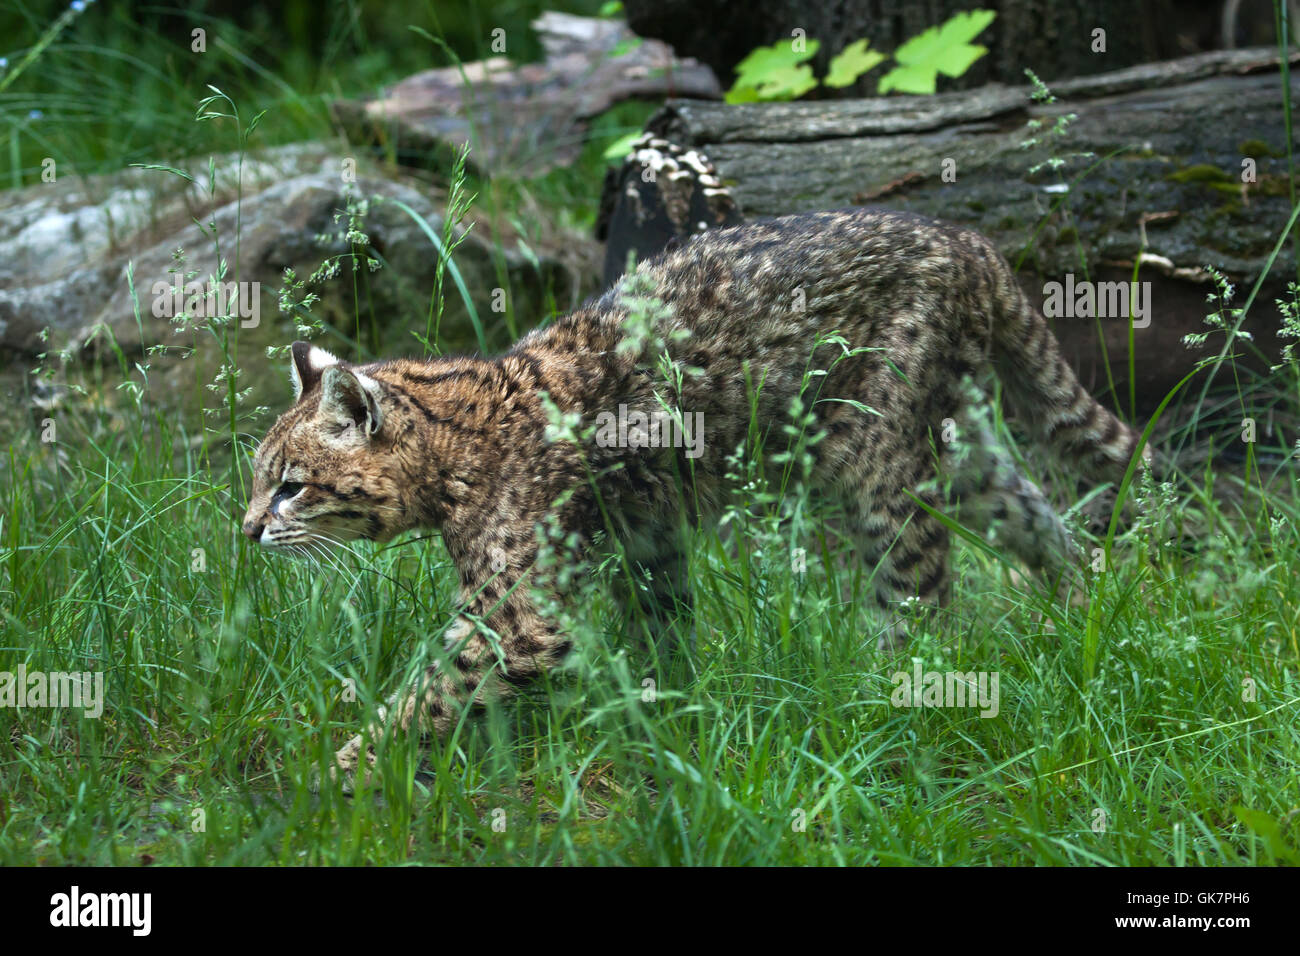 Geoffroy's cat (Leopardus geoffroyi). Wildlife animal. Stock Photo